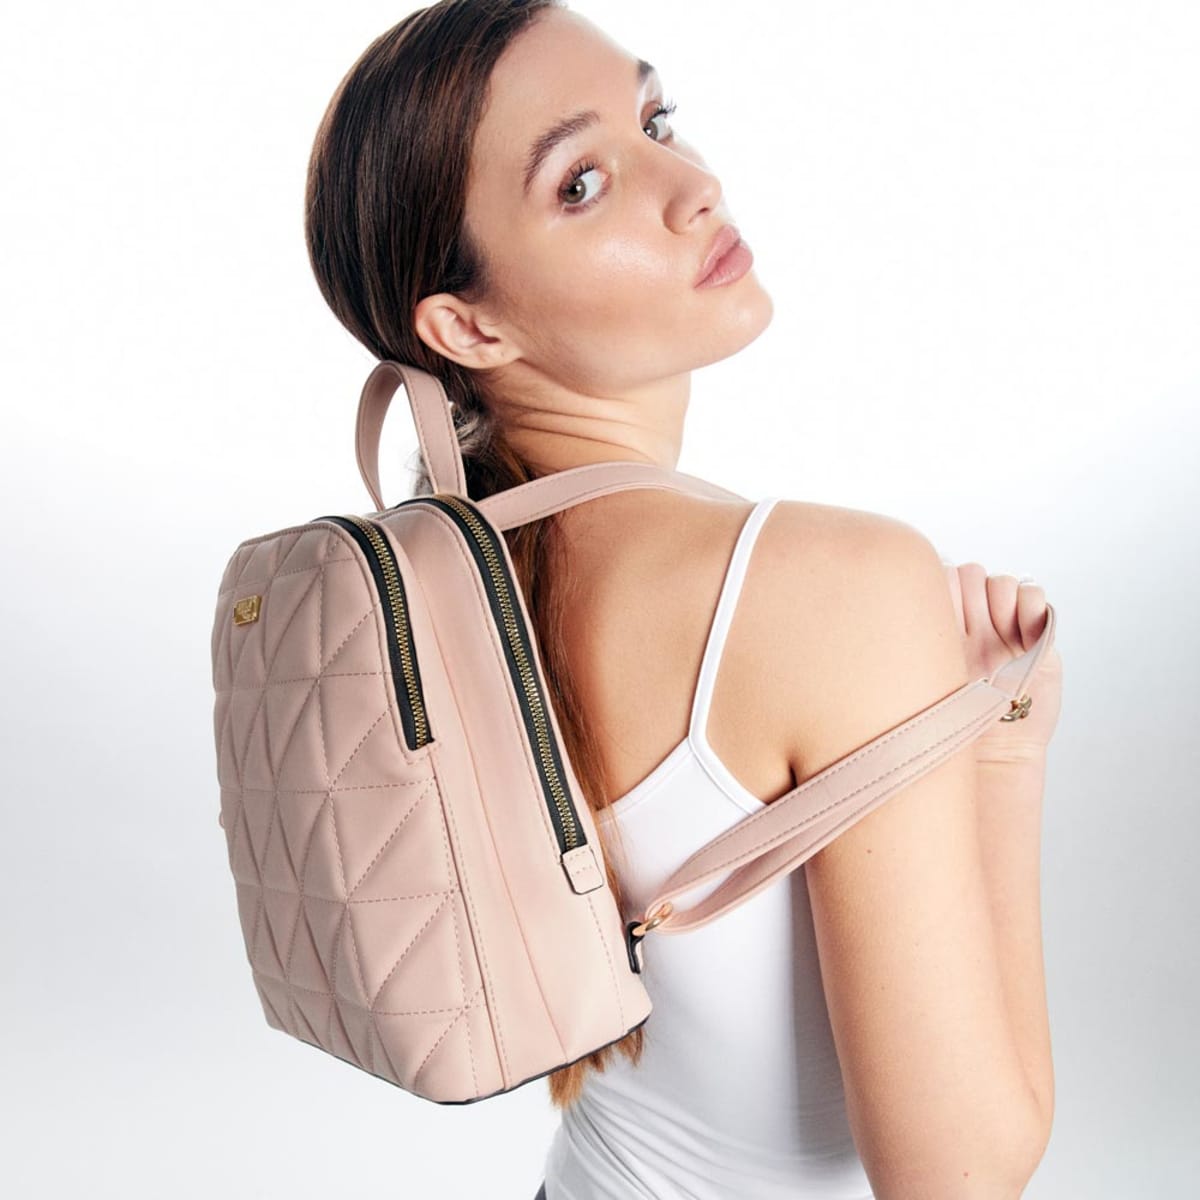 Mochila / Backpack para mujer, marca Holly Land, color rosa, mod. 996187